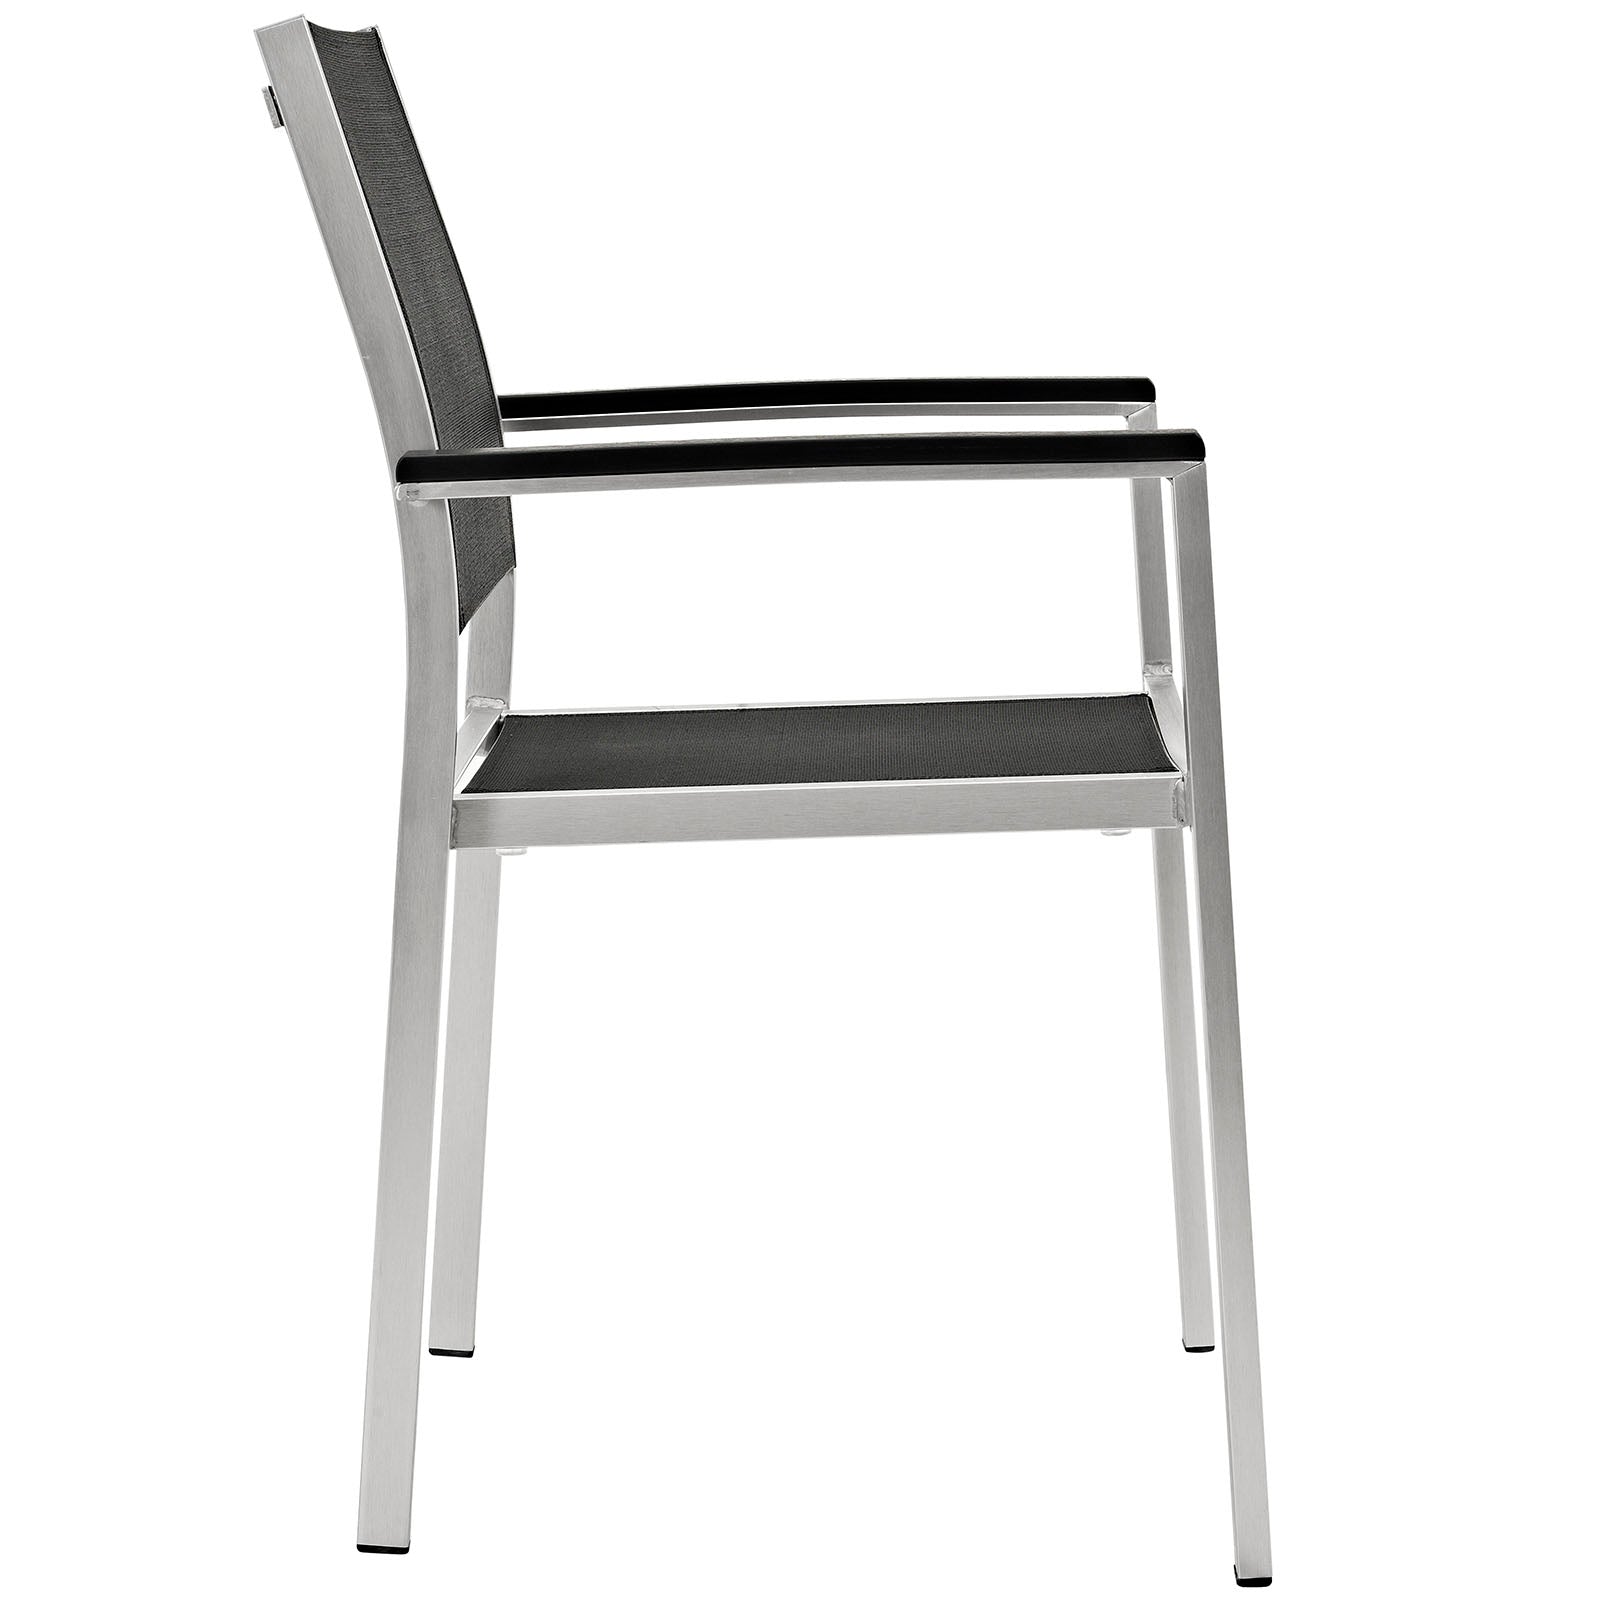 Modway - Shore Dining Chair Outdoor Patio Aluminum Set of 2 - EEI-2586